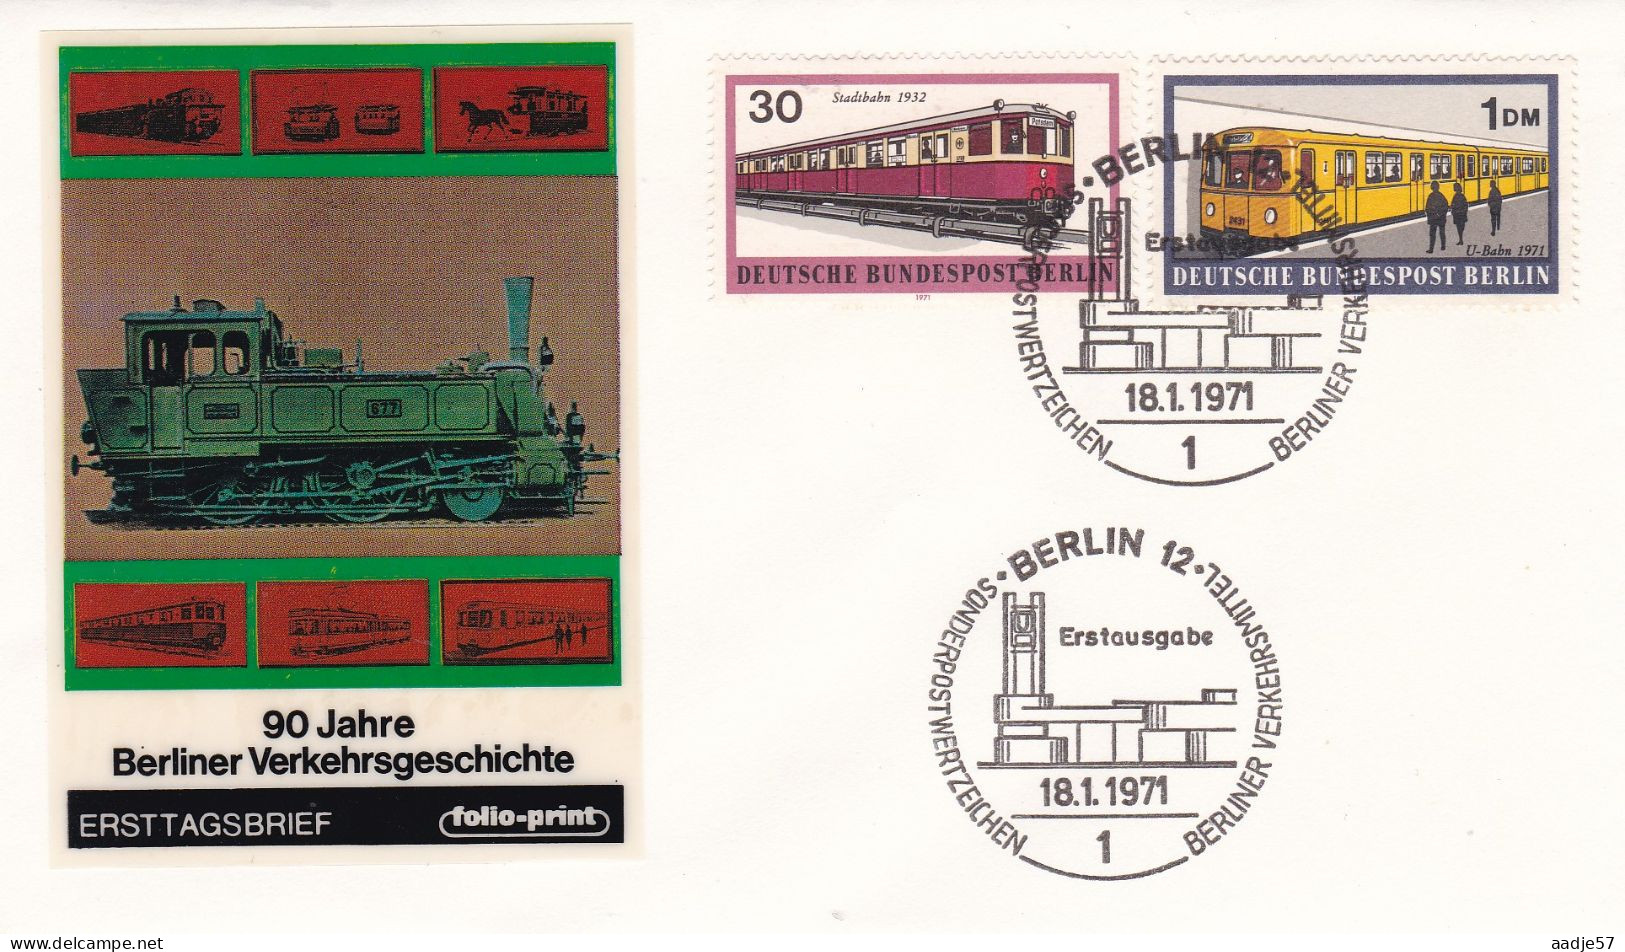 Deutschland Germany Berlin: 18.01.1971 FDC -Berliner Verkehrsmittel - Trains